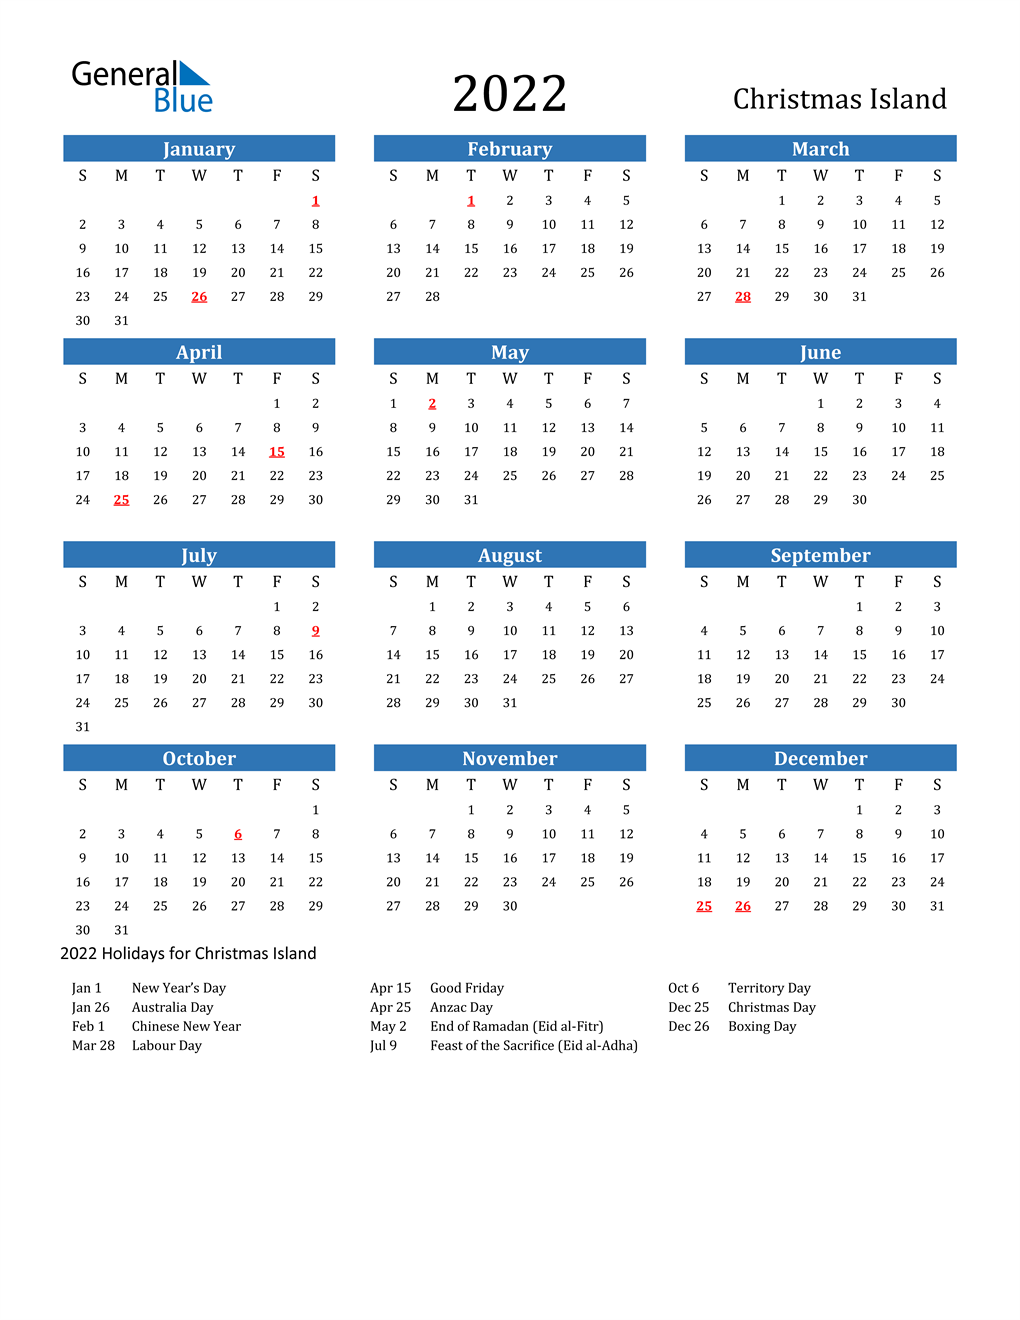 Christmas Calendar 2022 2022 Christmas Island Calendar With Holidays